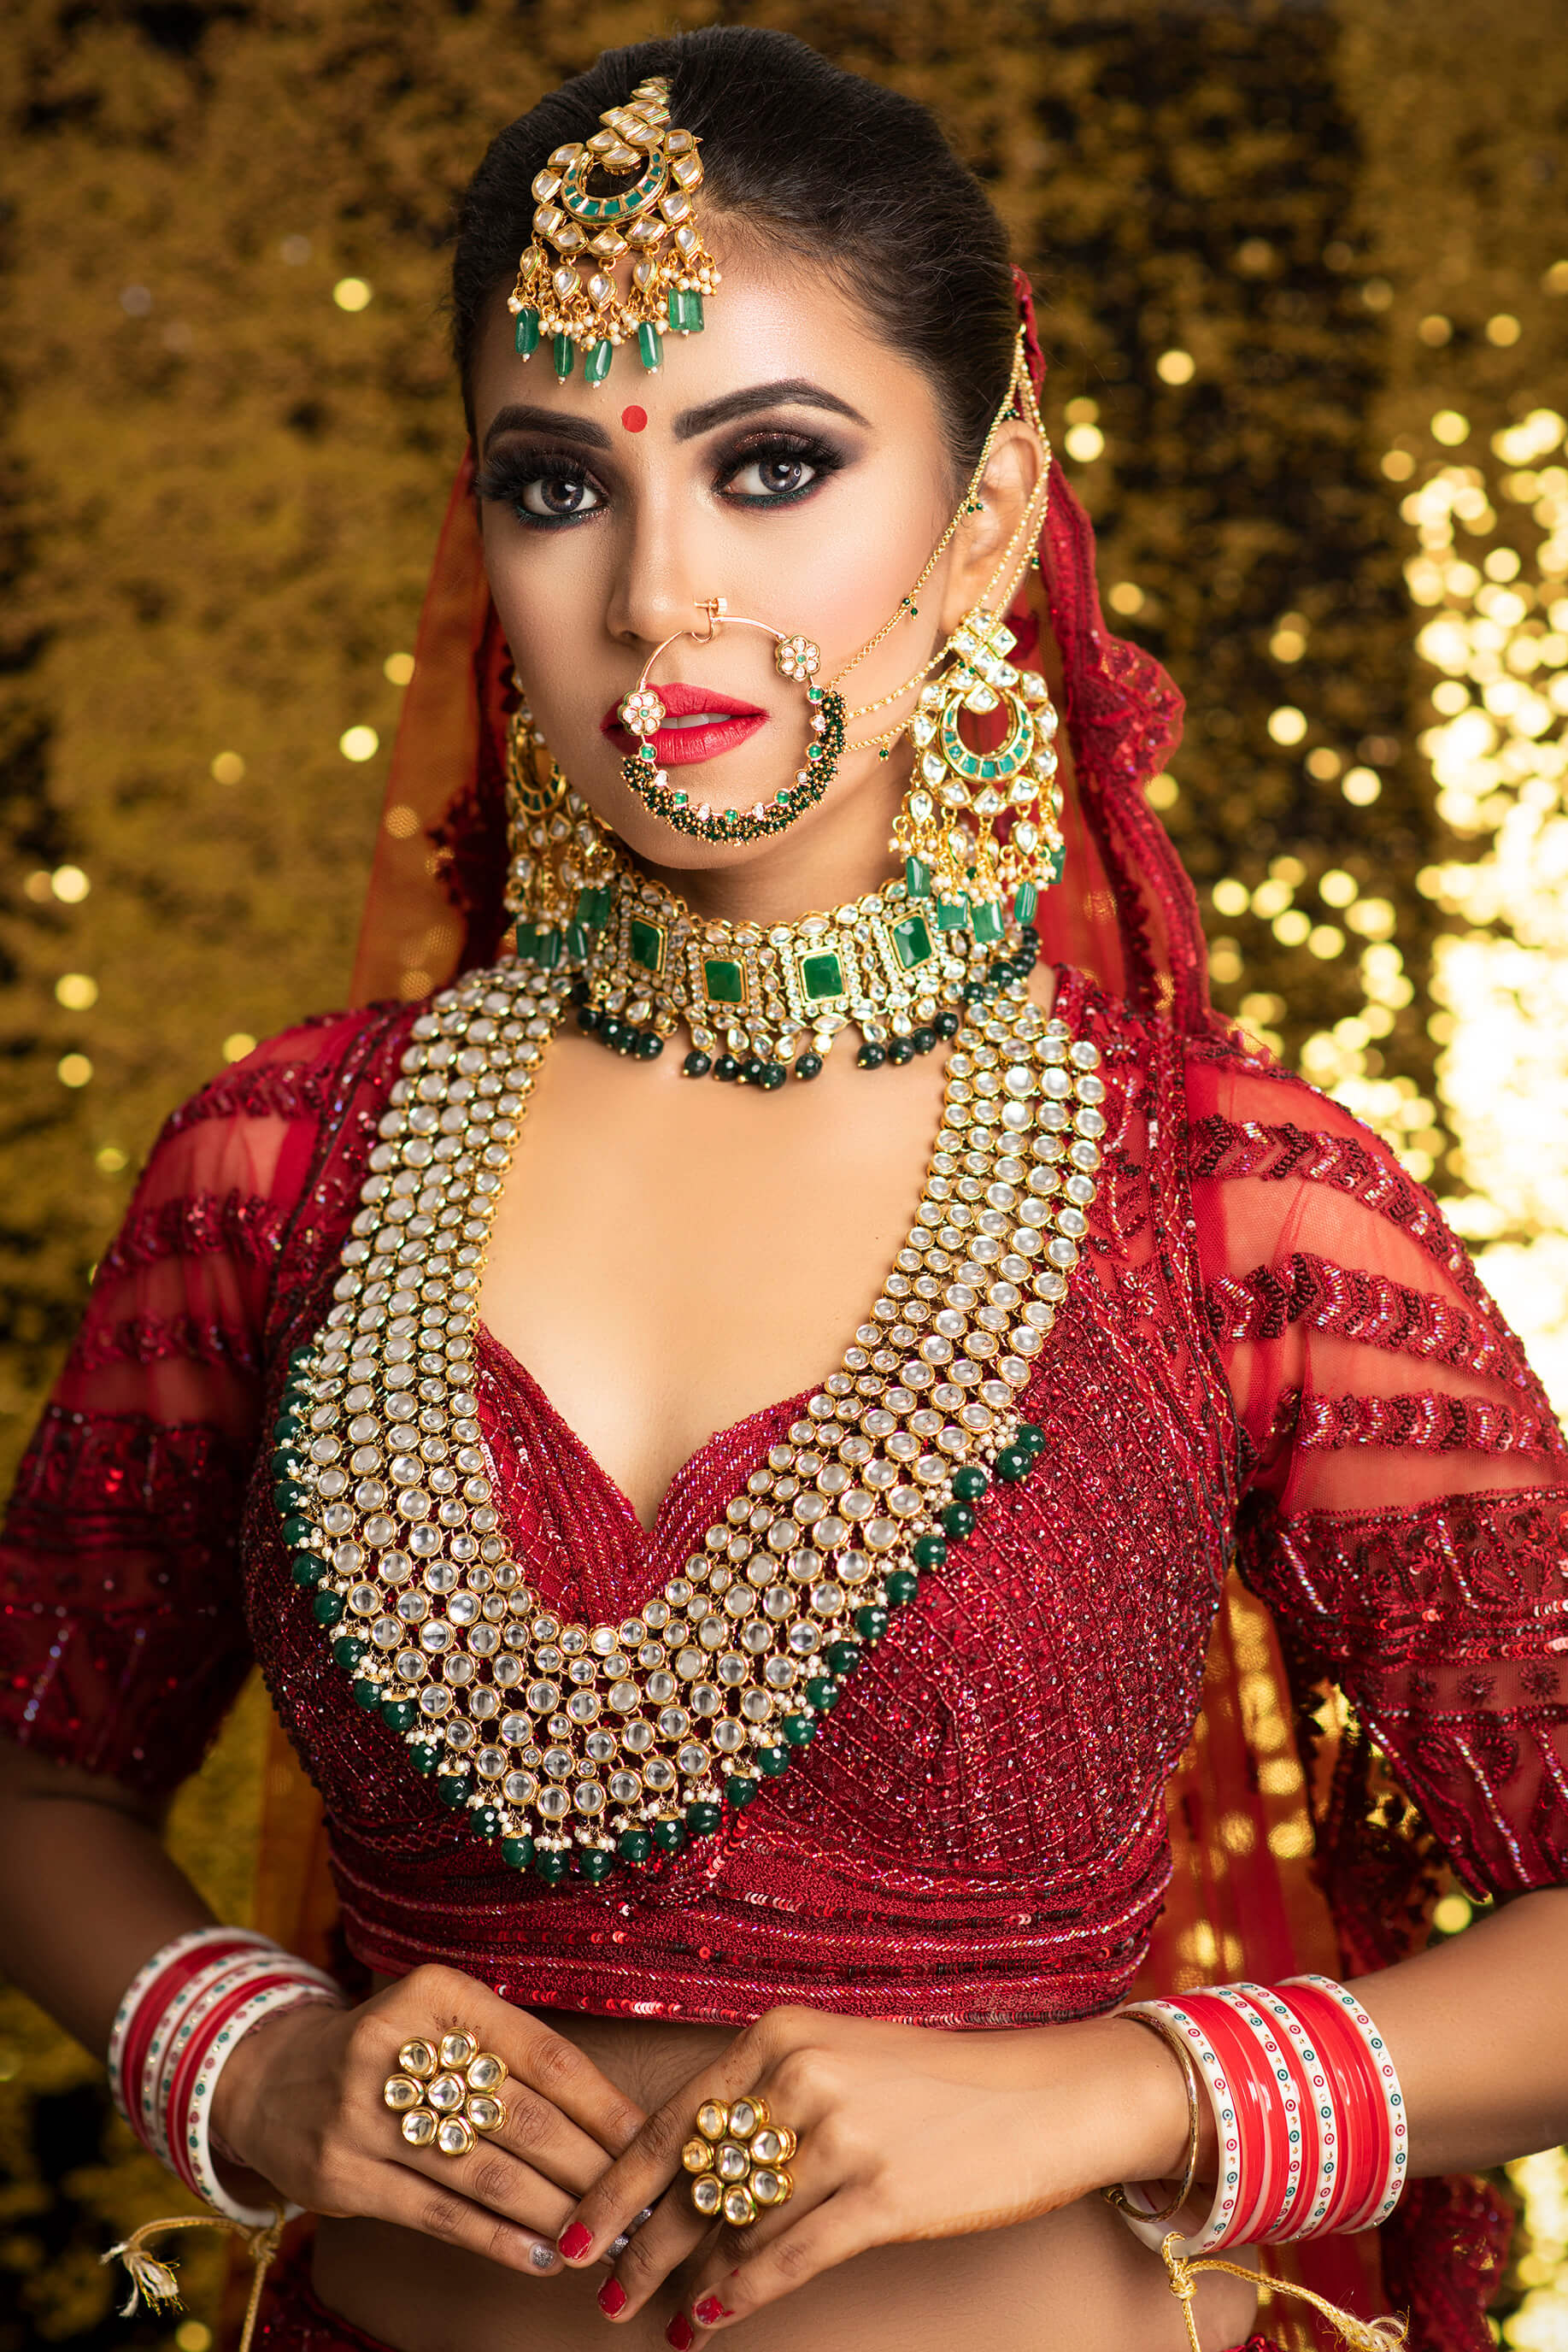 Manisha Bridal Mehendi Profile Pic